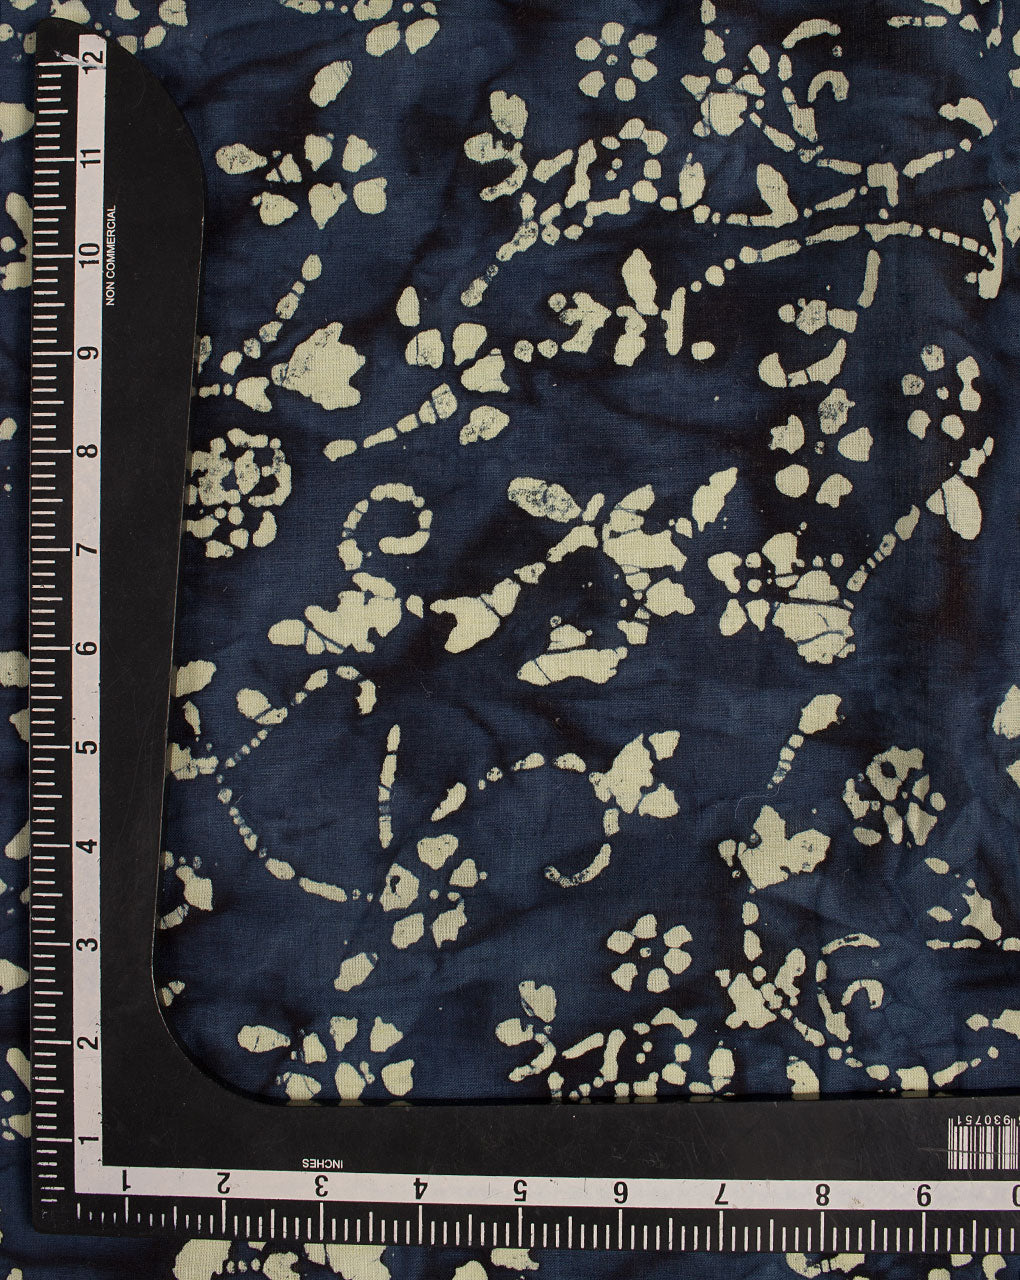 Wax Batik Hand Block Loom Textured Cotton Fabric